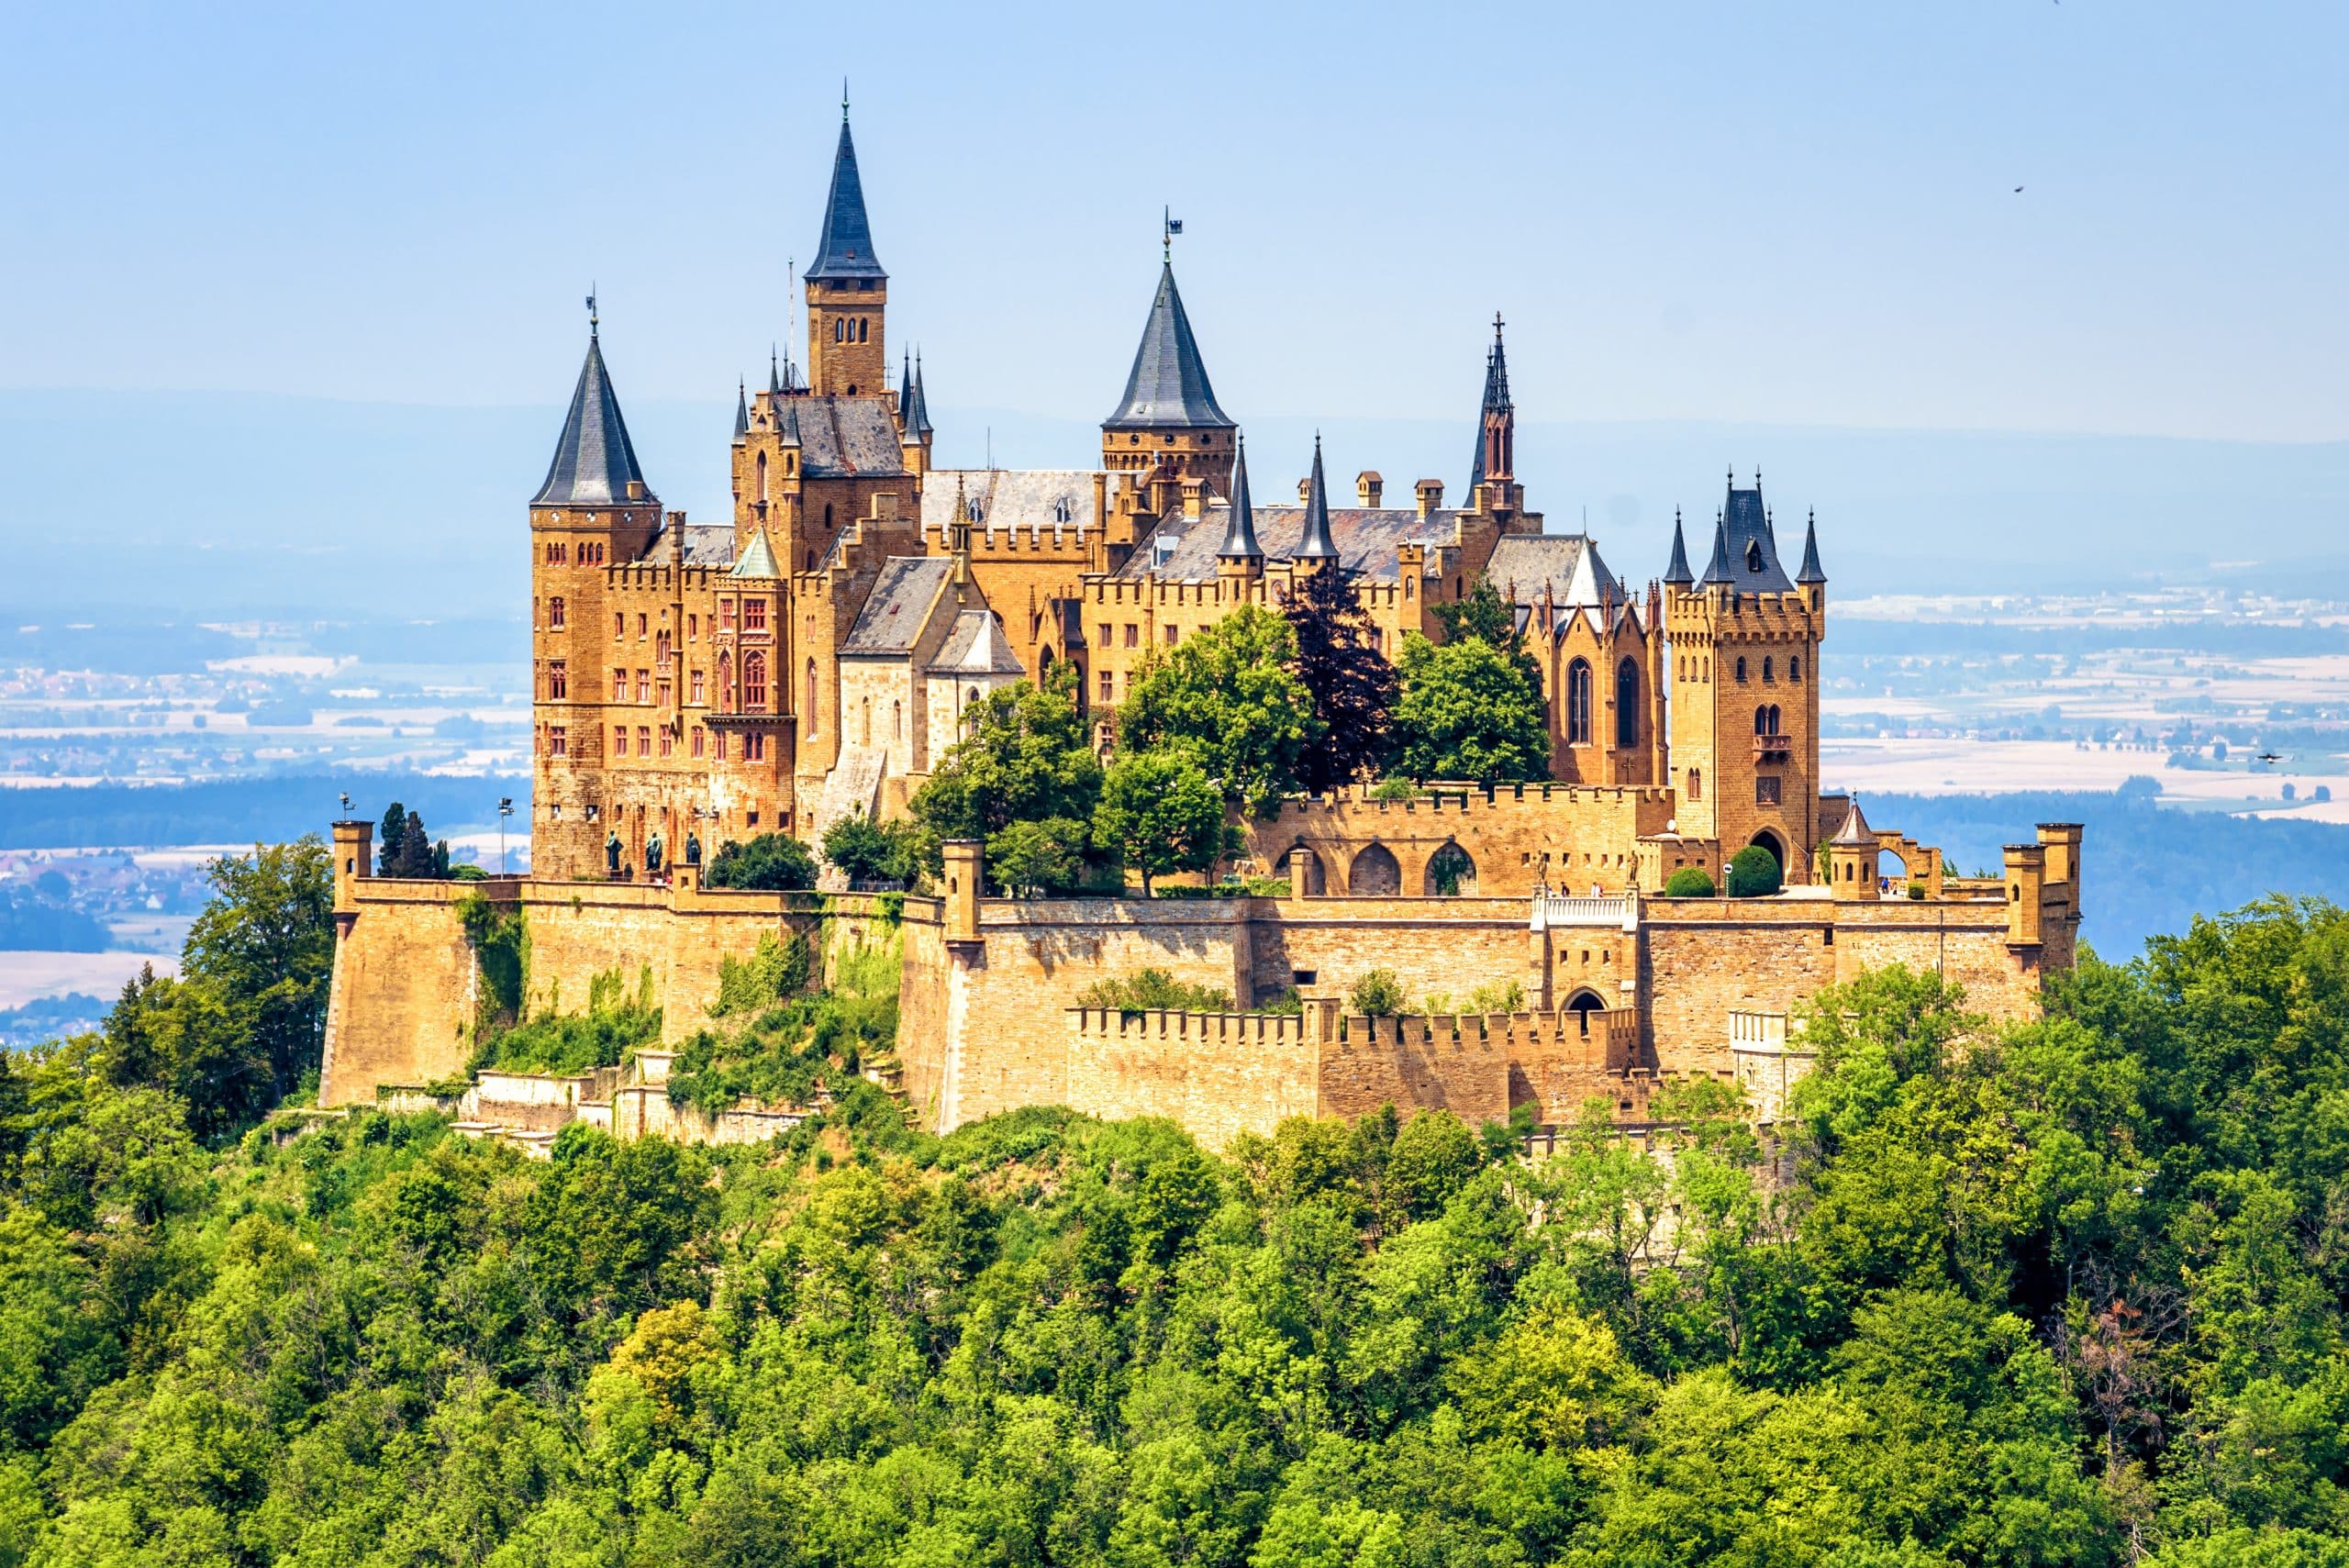 Hohenzollern Castle on mountain top close-up, Germany. Fairytale castle is famous landmark near Stuttgart.